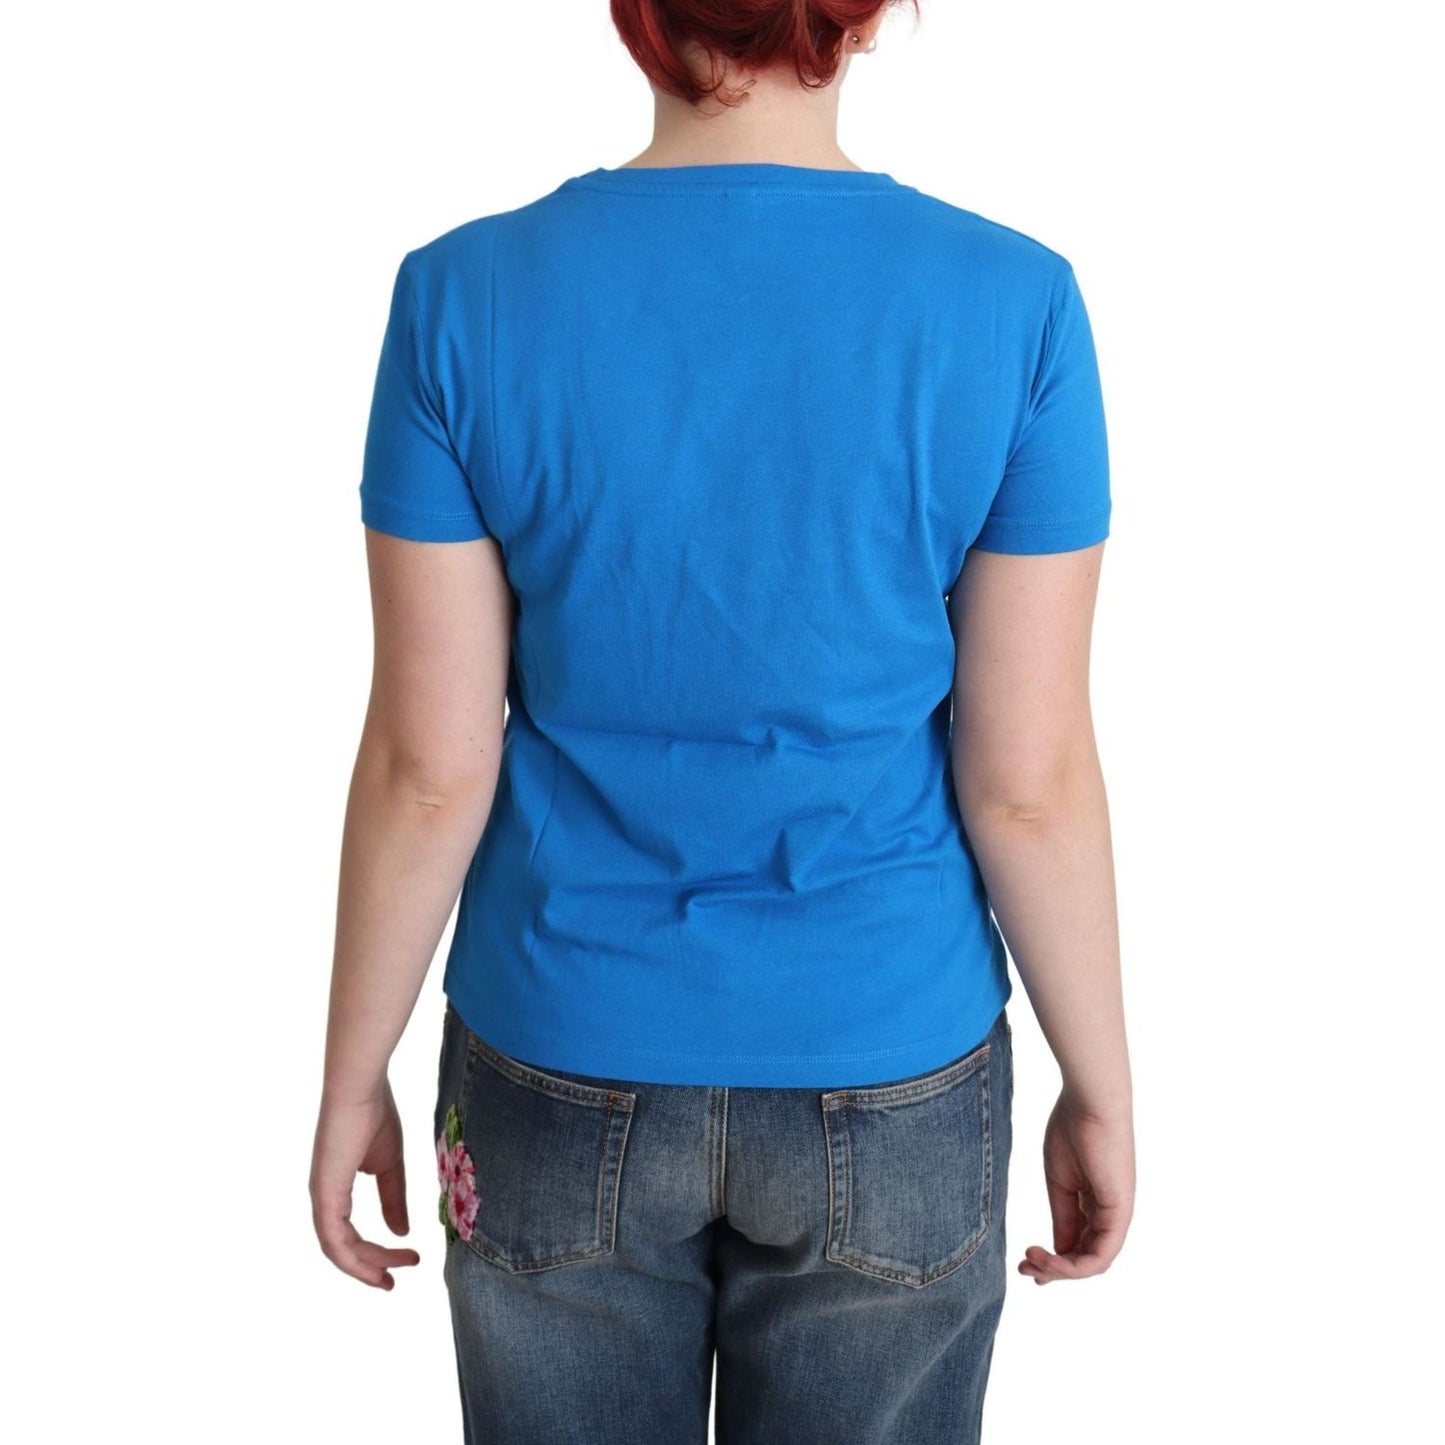 Moschino Sunny Milano Chic Round Neck Tee blue-cotton-sunny-milano-print-tops-t-shirt IMG_0875-scaled-96f8b0ca-f45.jpg